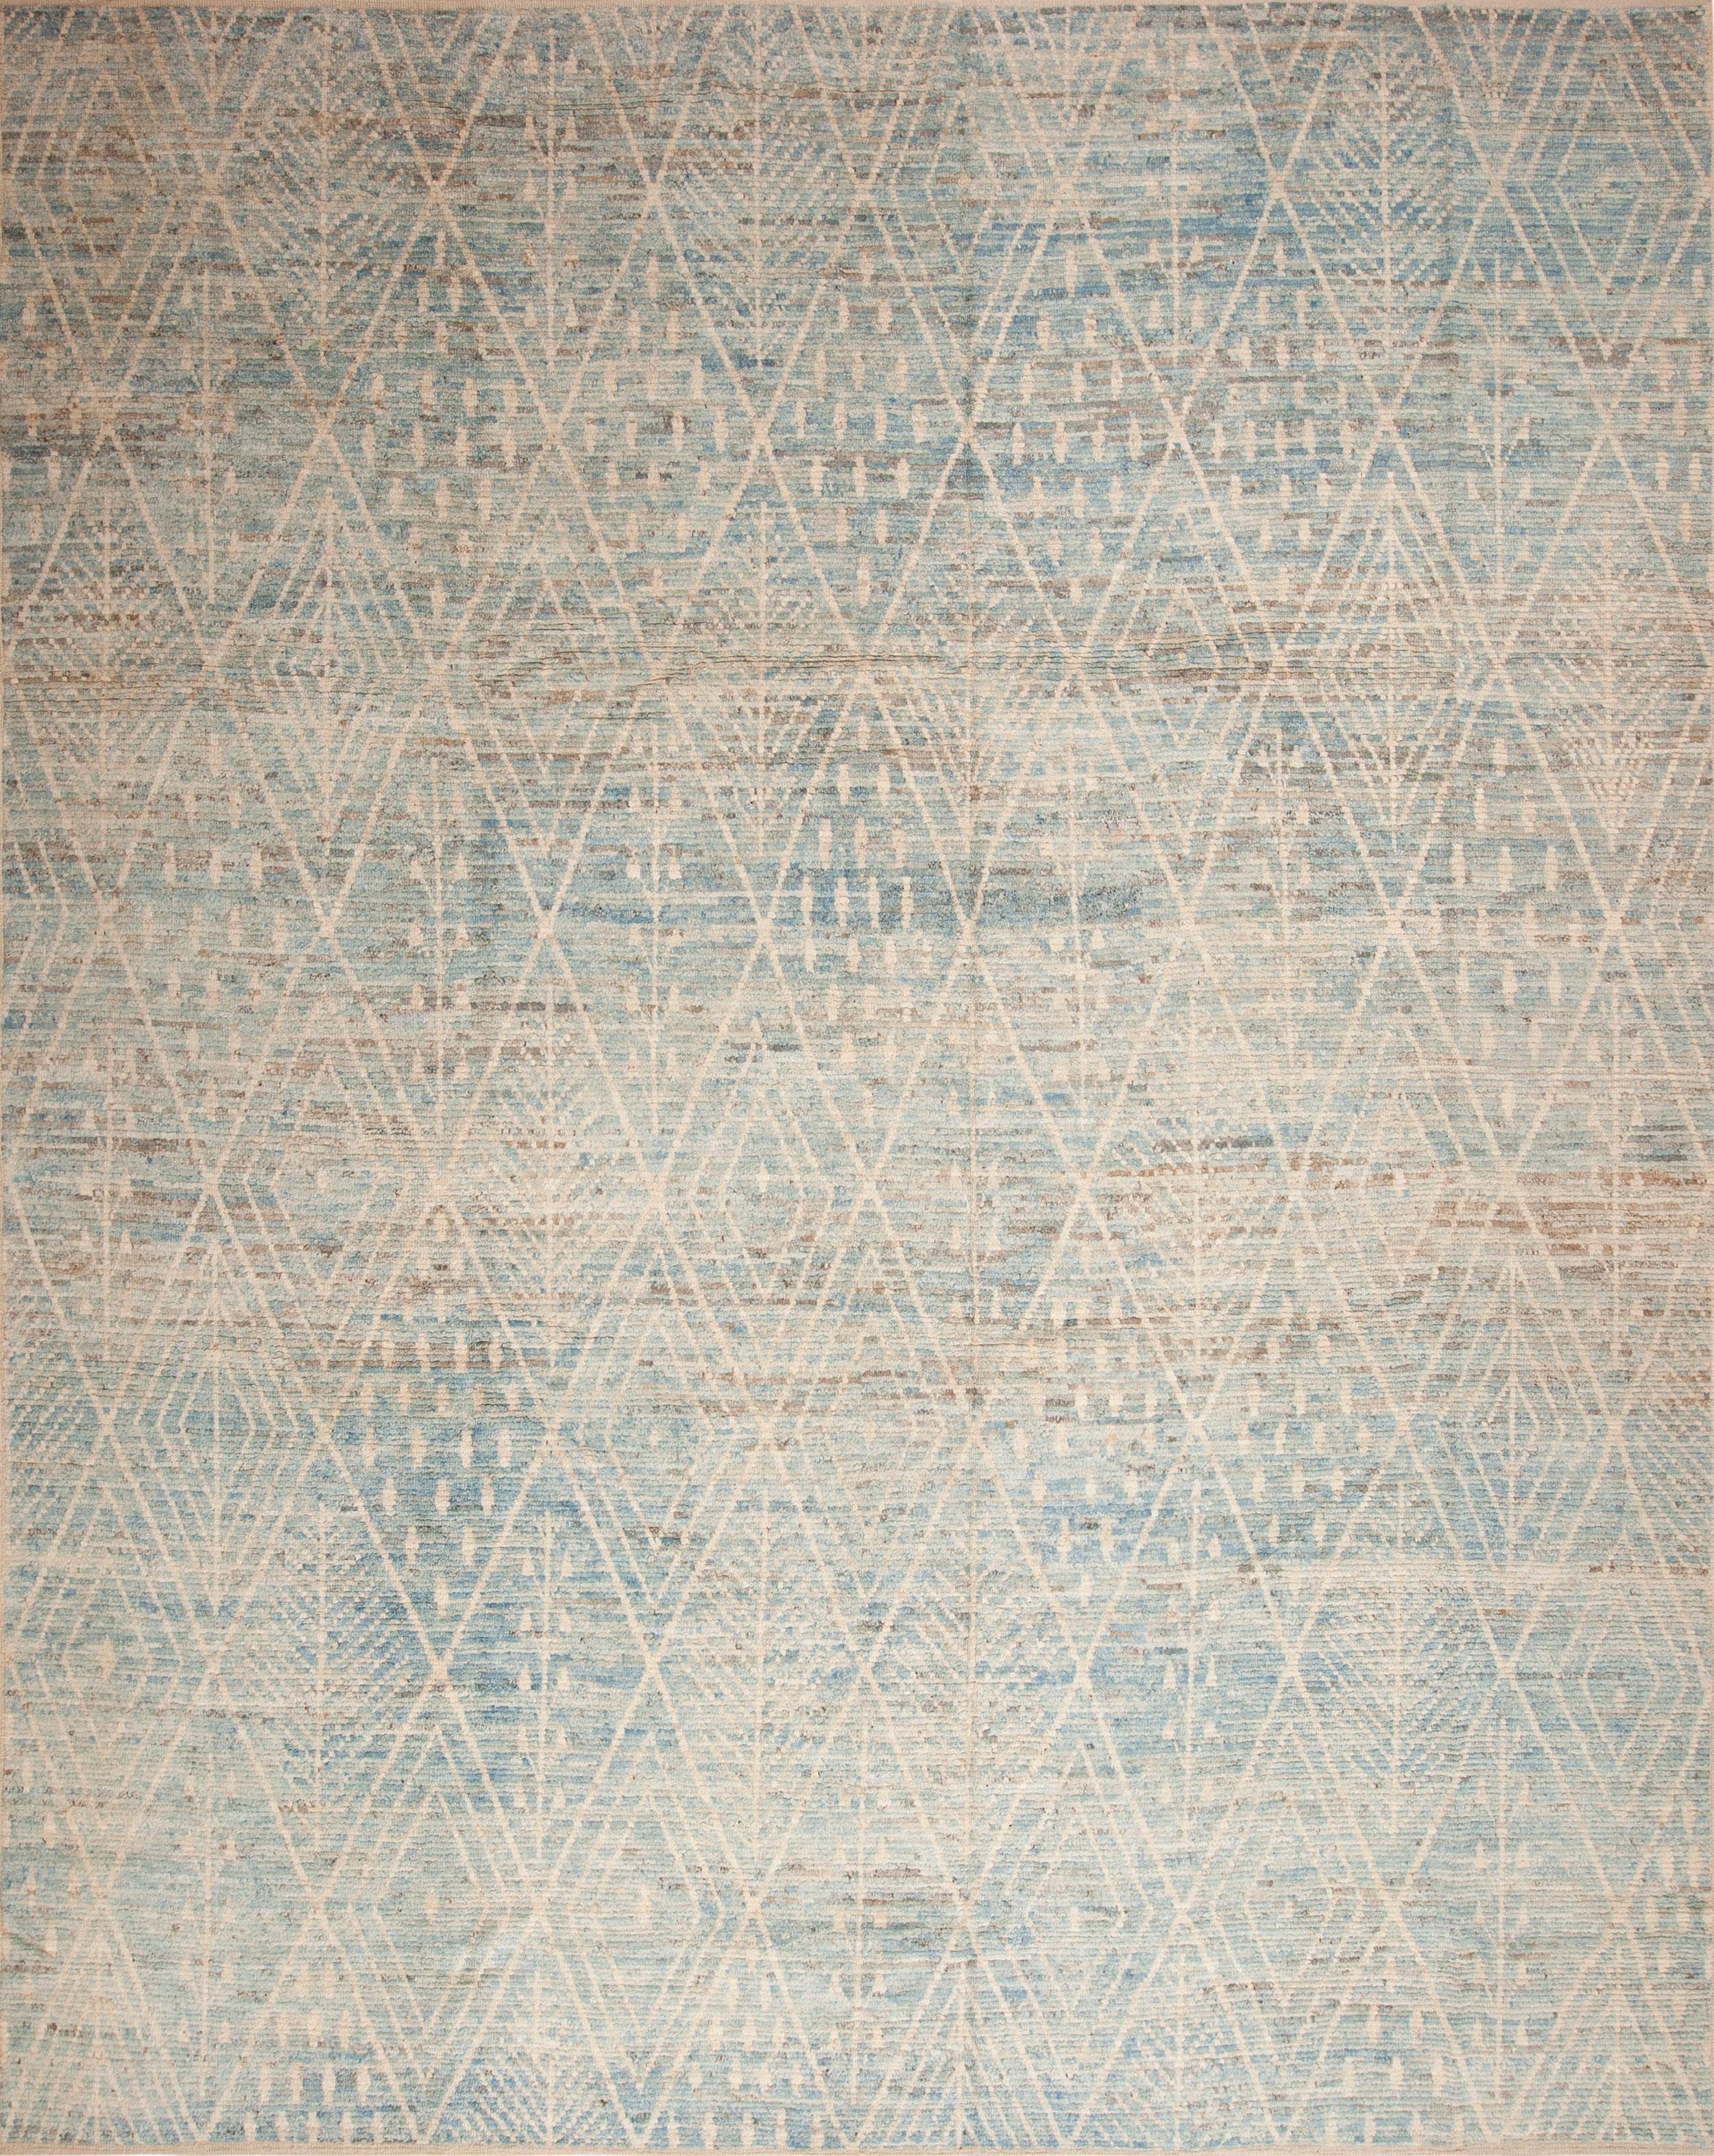 Tissé à la main Collection Nazmiyal - Grand tapis Beni Ourain marocain tribal et moderne de 12' x 15' en vente